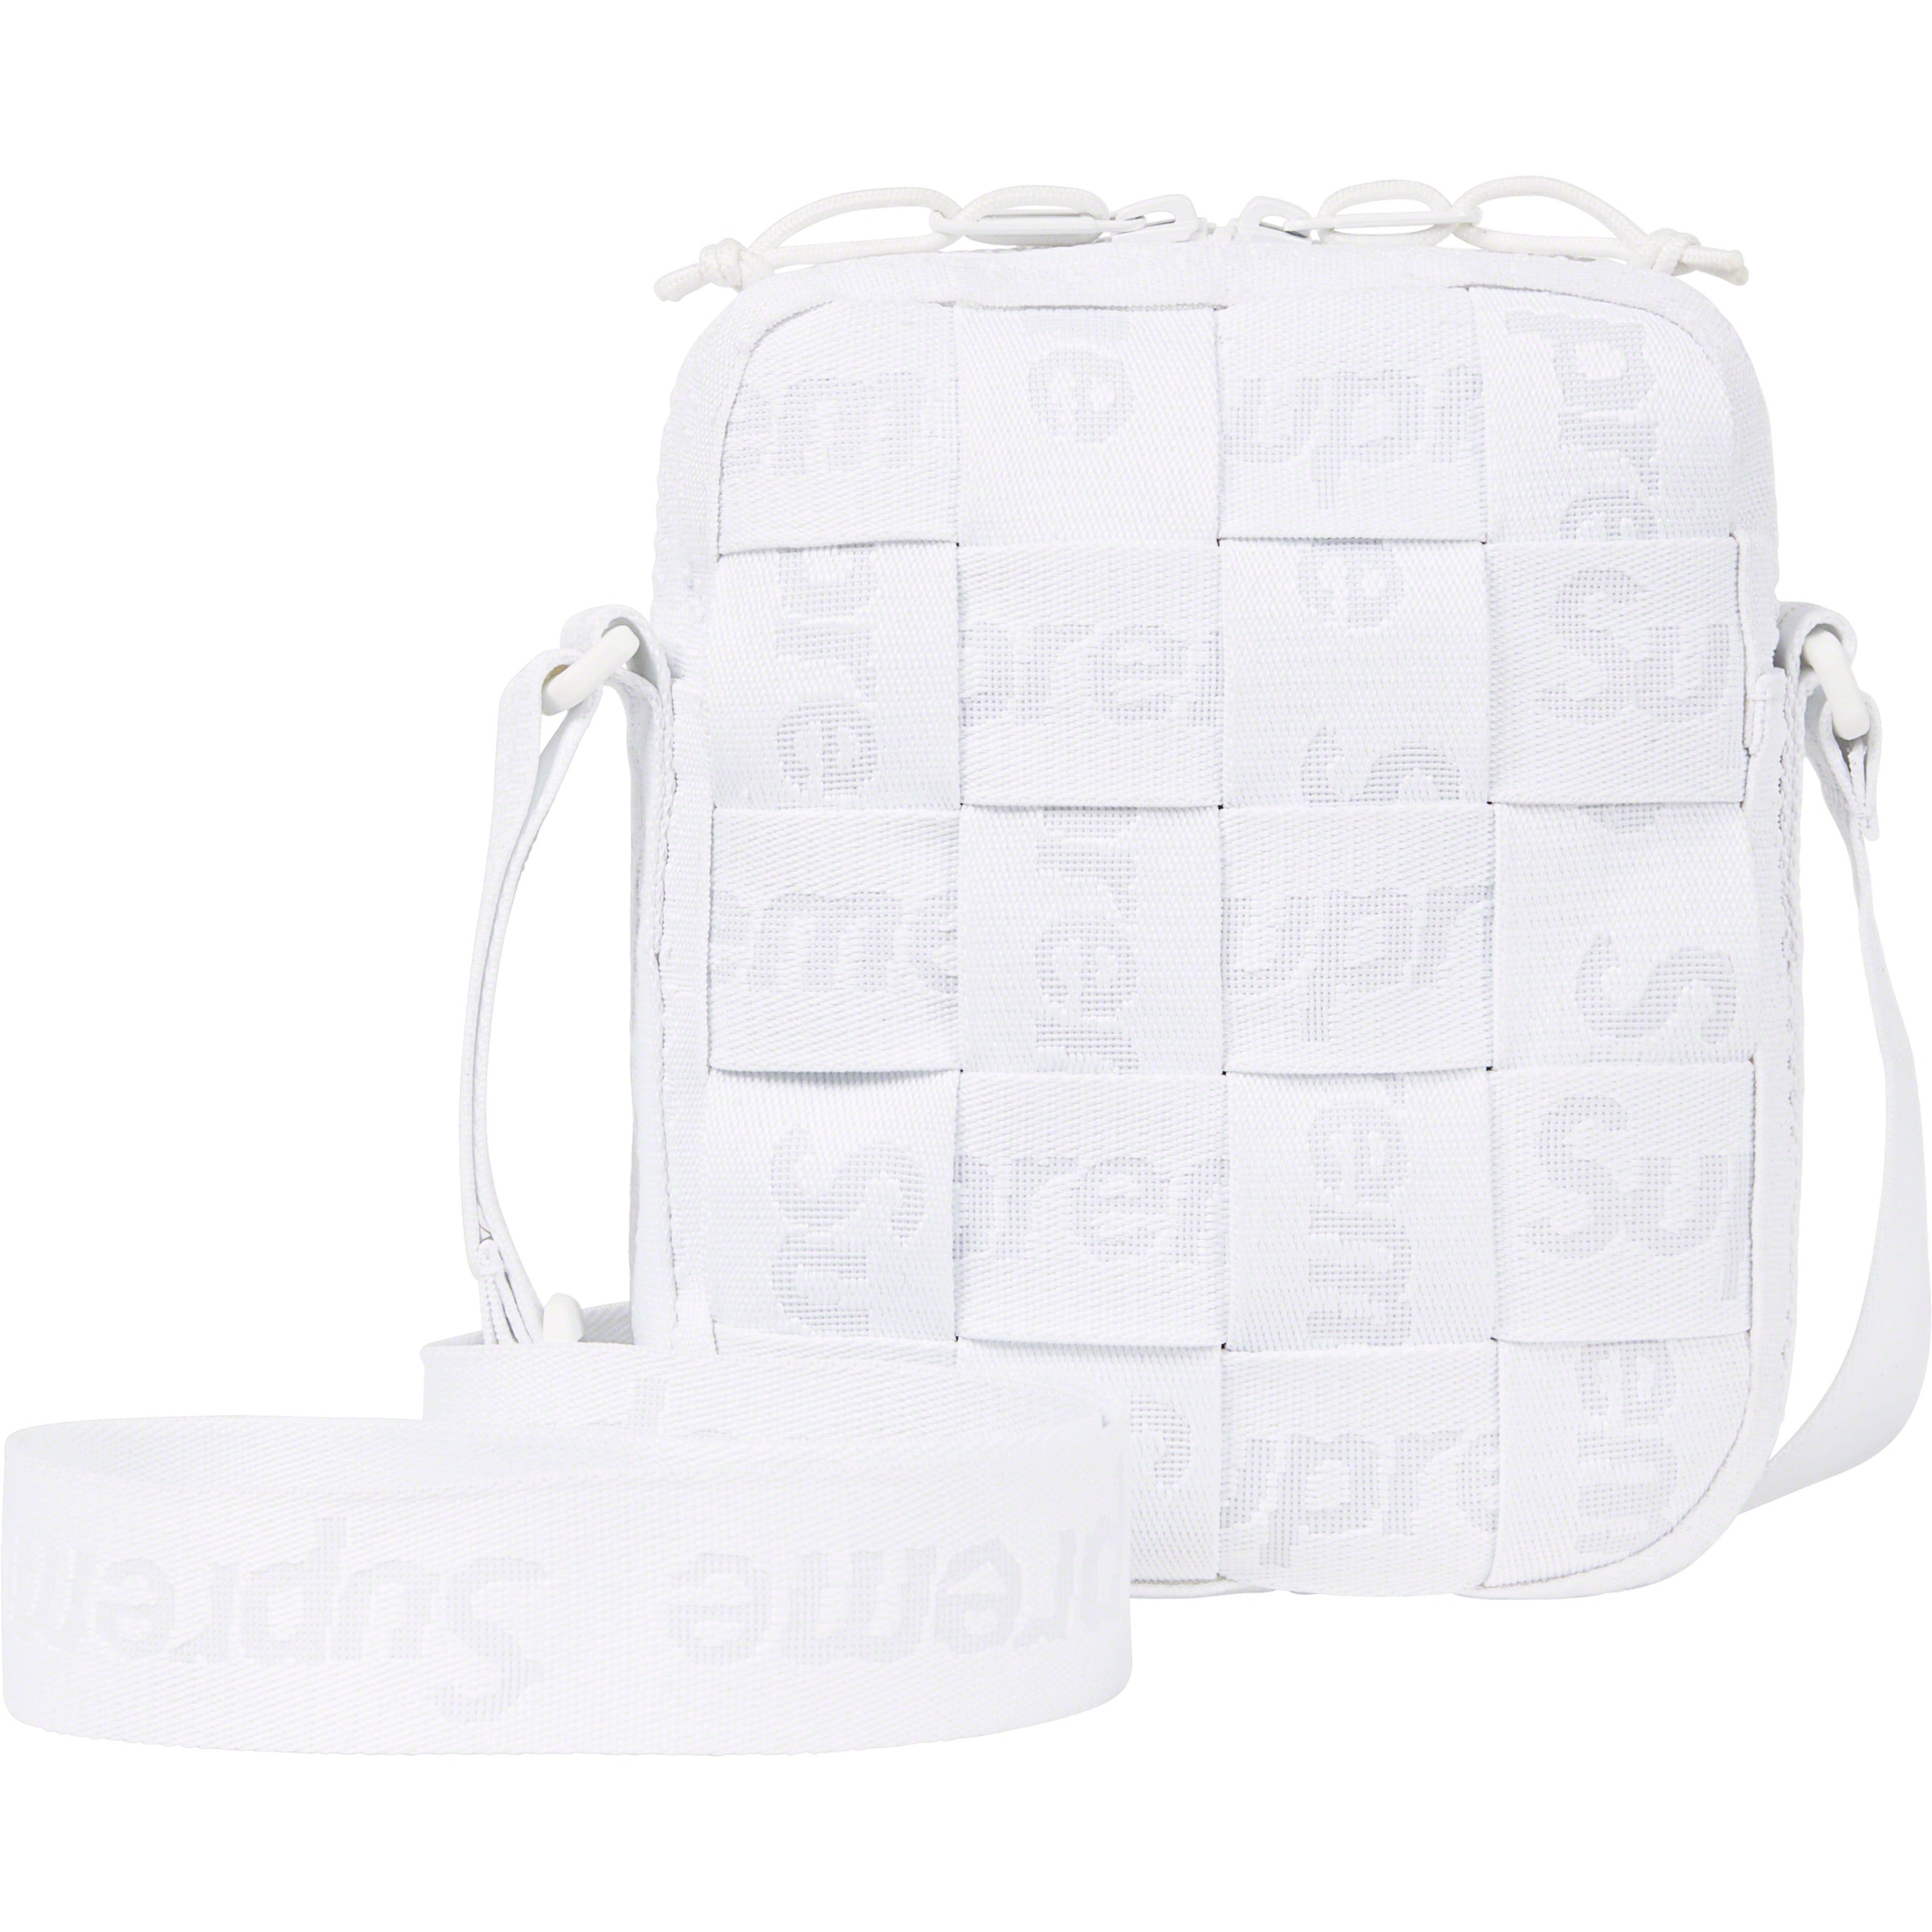 Supreme 2023-24FW Unisex Nylon Street Style Crossbody Bag Small Shoulder Bag